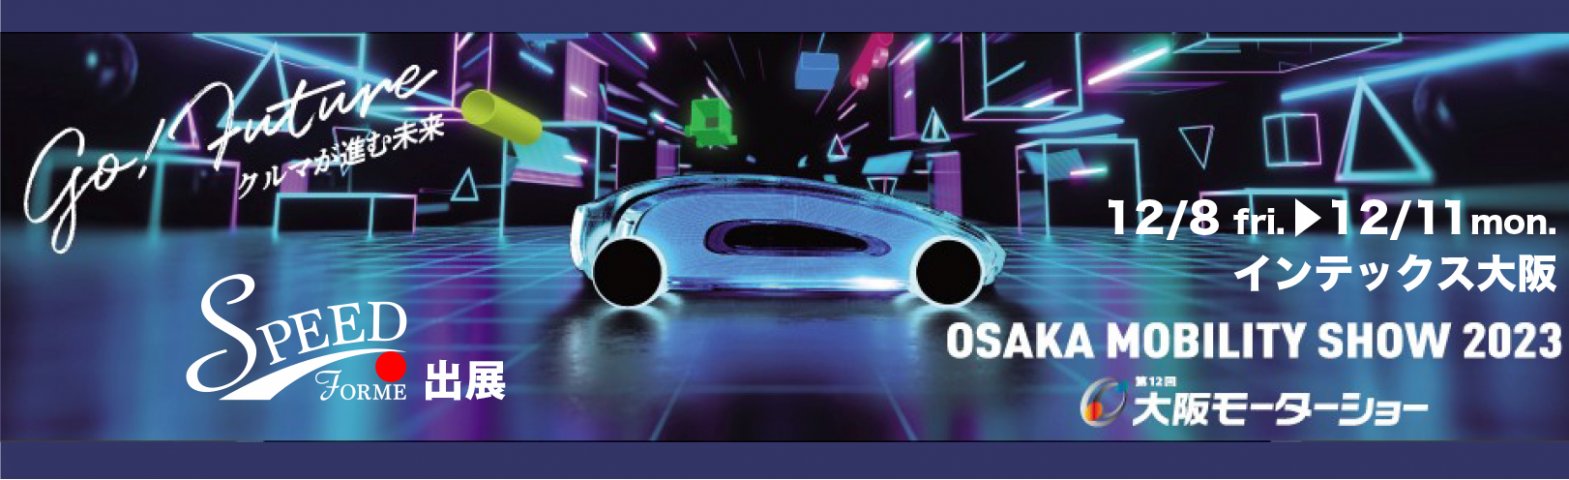 OSAKA MOBILITY SHOW 2023 タイトル画像